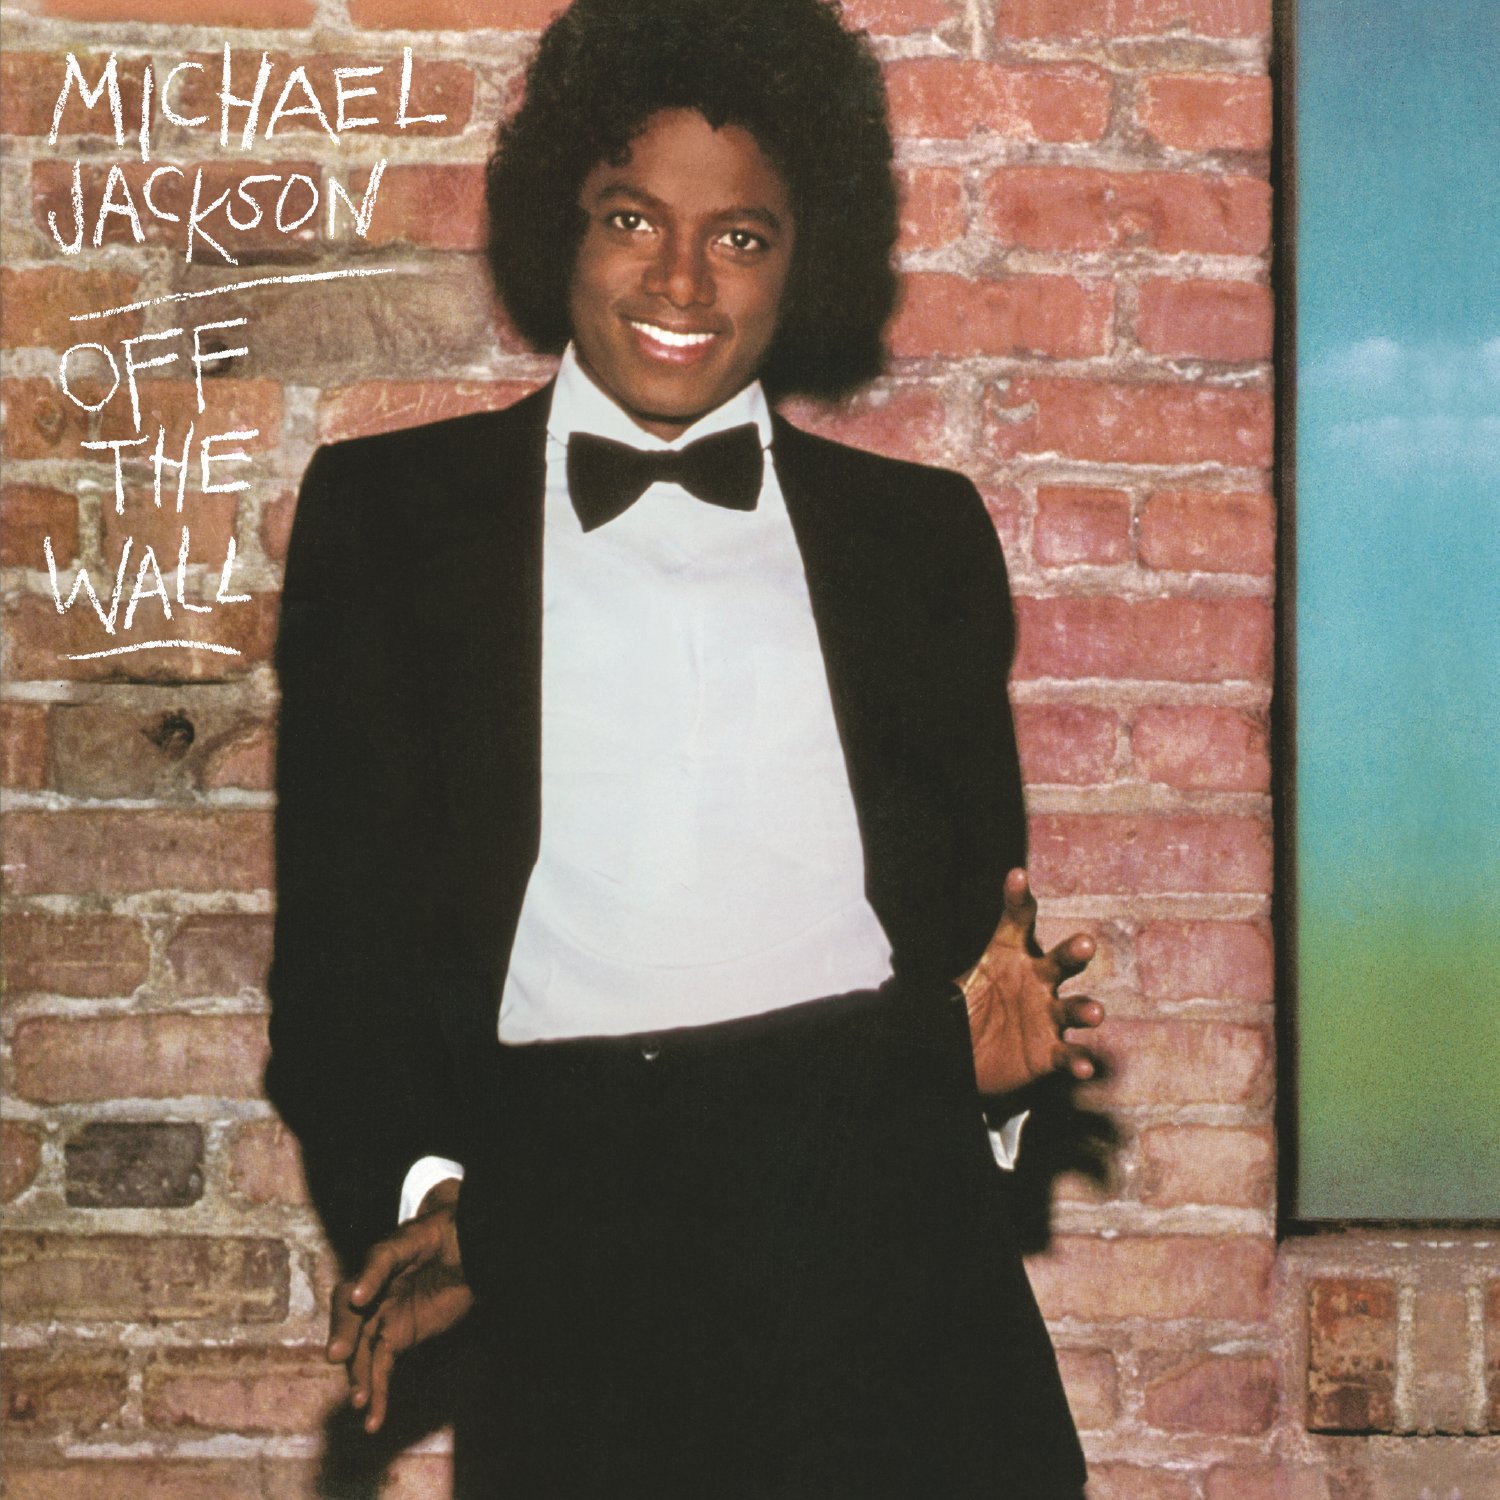 off-the-wall-Michael-Jackson_Amazon.